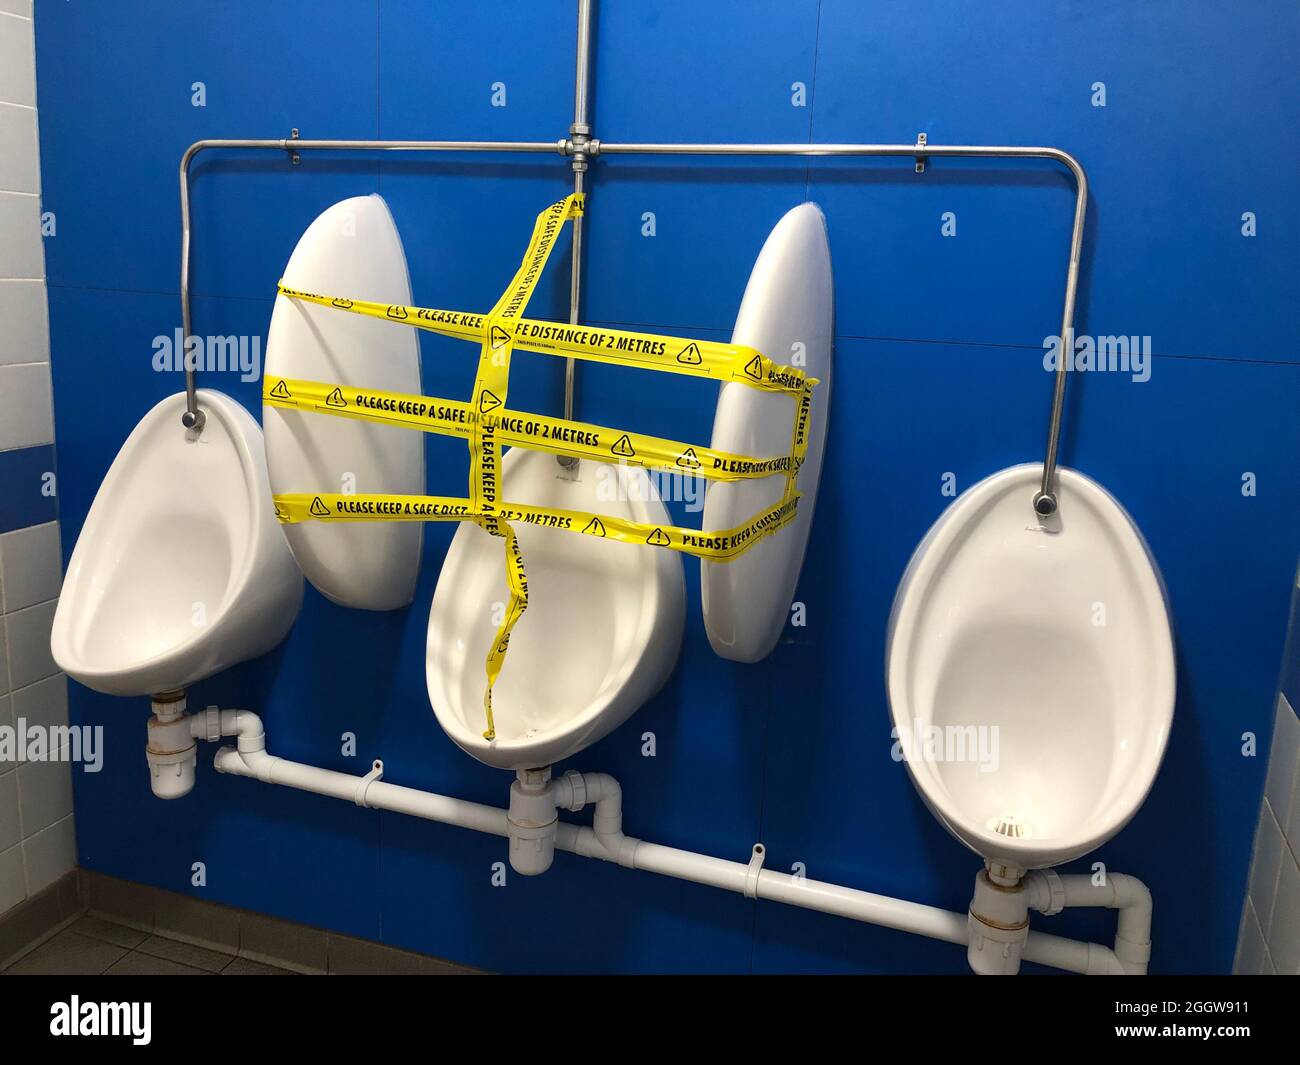 covid19 prevention in toilet areas Stock Photo